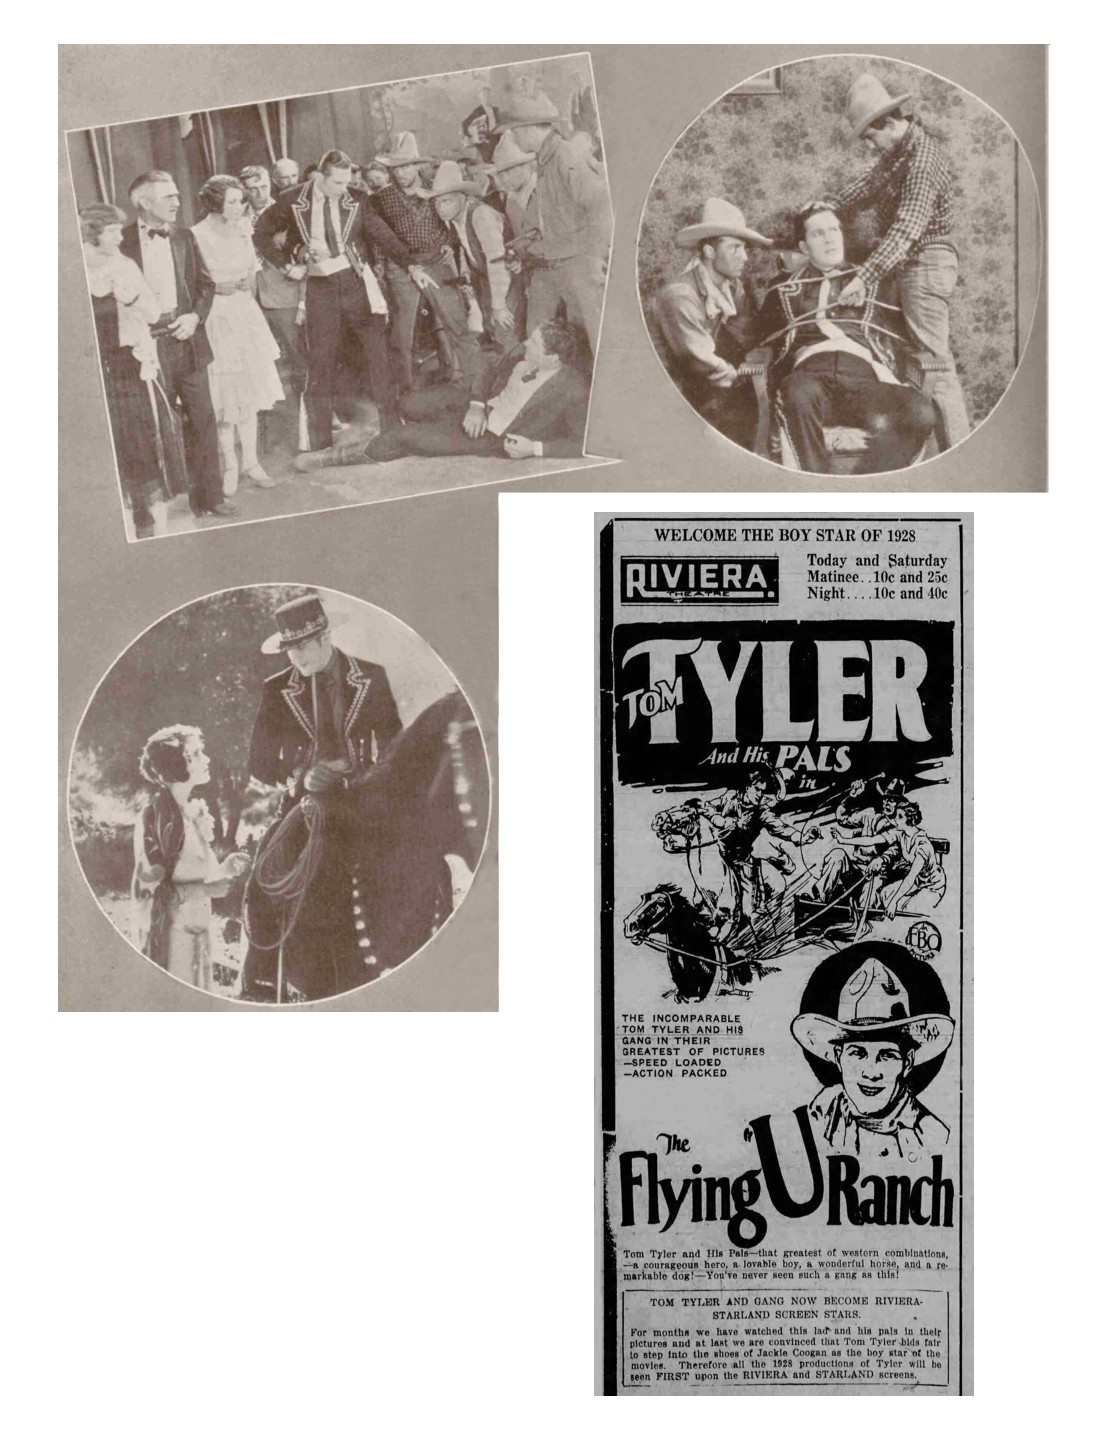 Flying U Ranch cinema ad The Bioscope